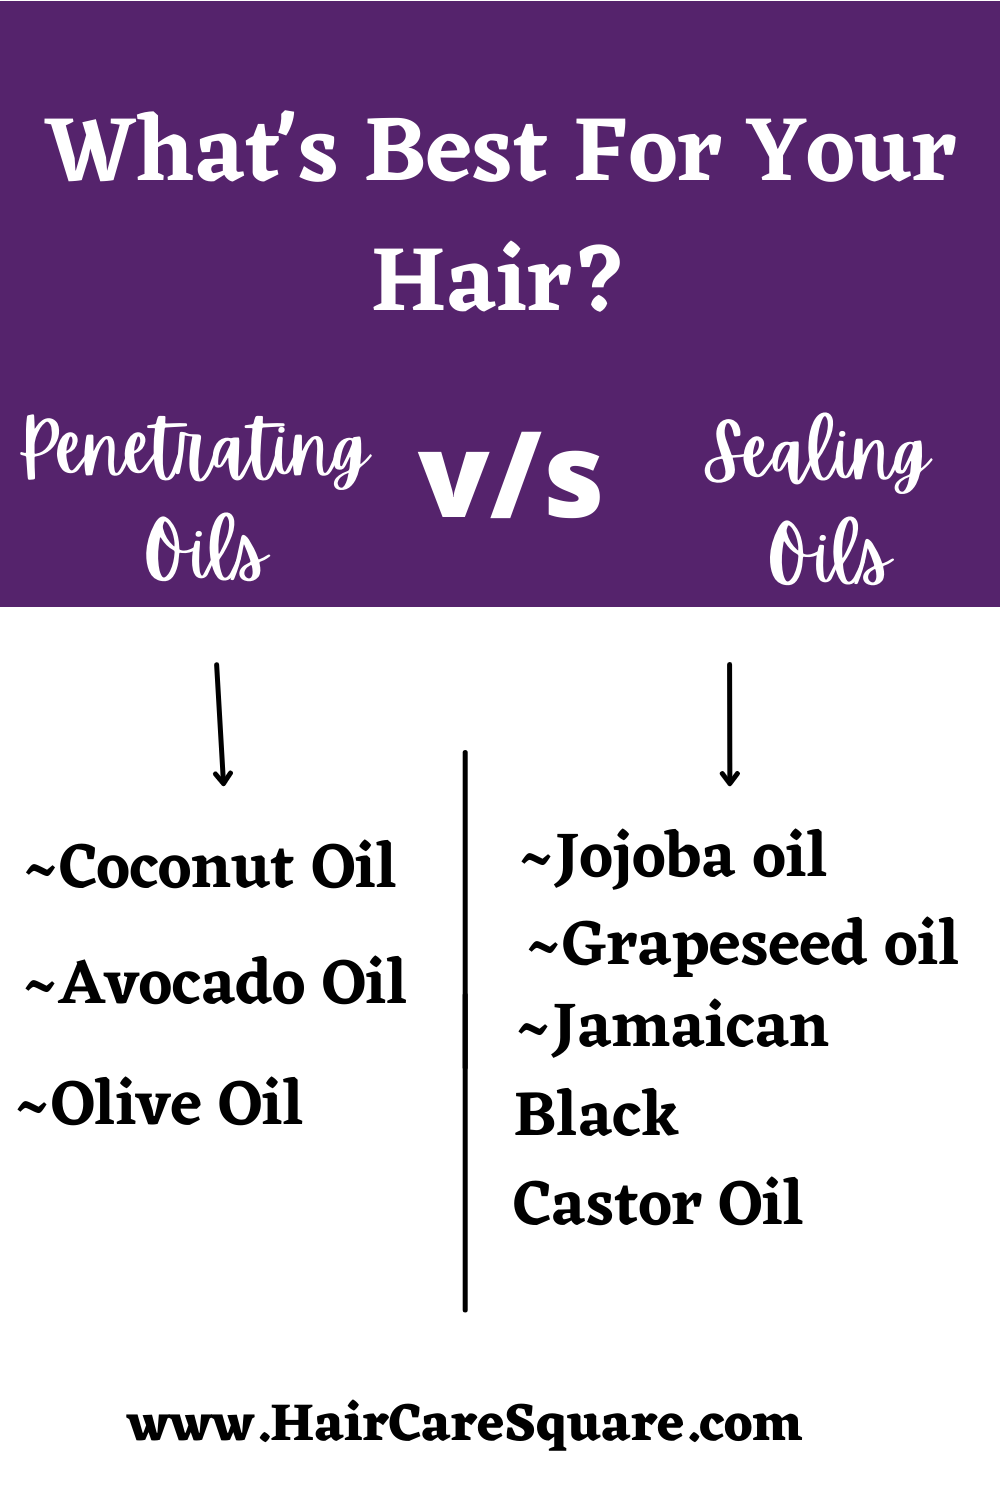 penetrating oils vs sealing oils